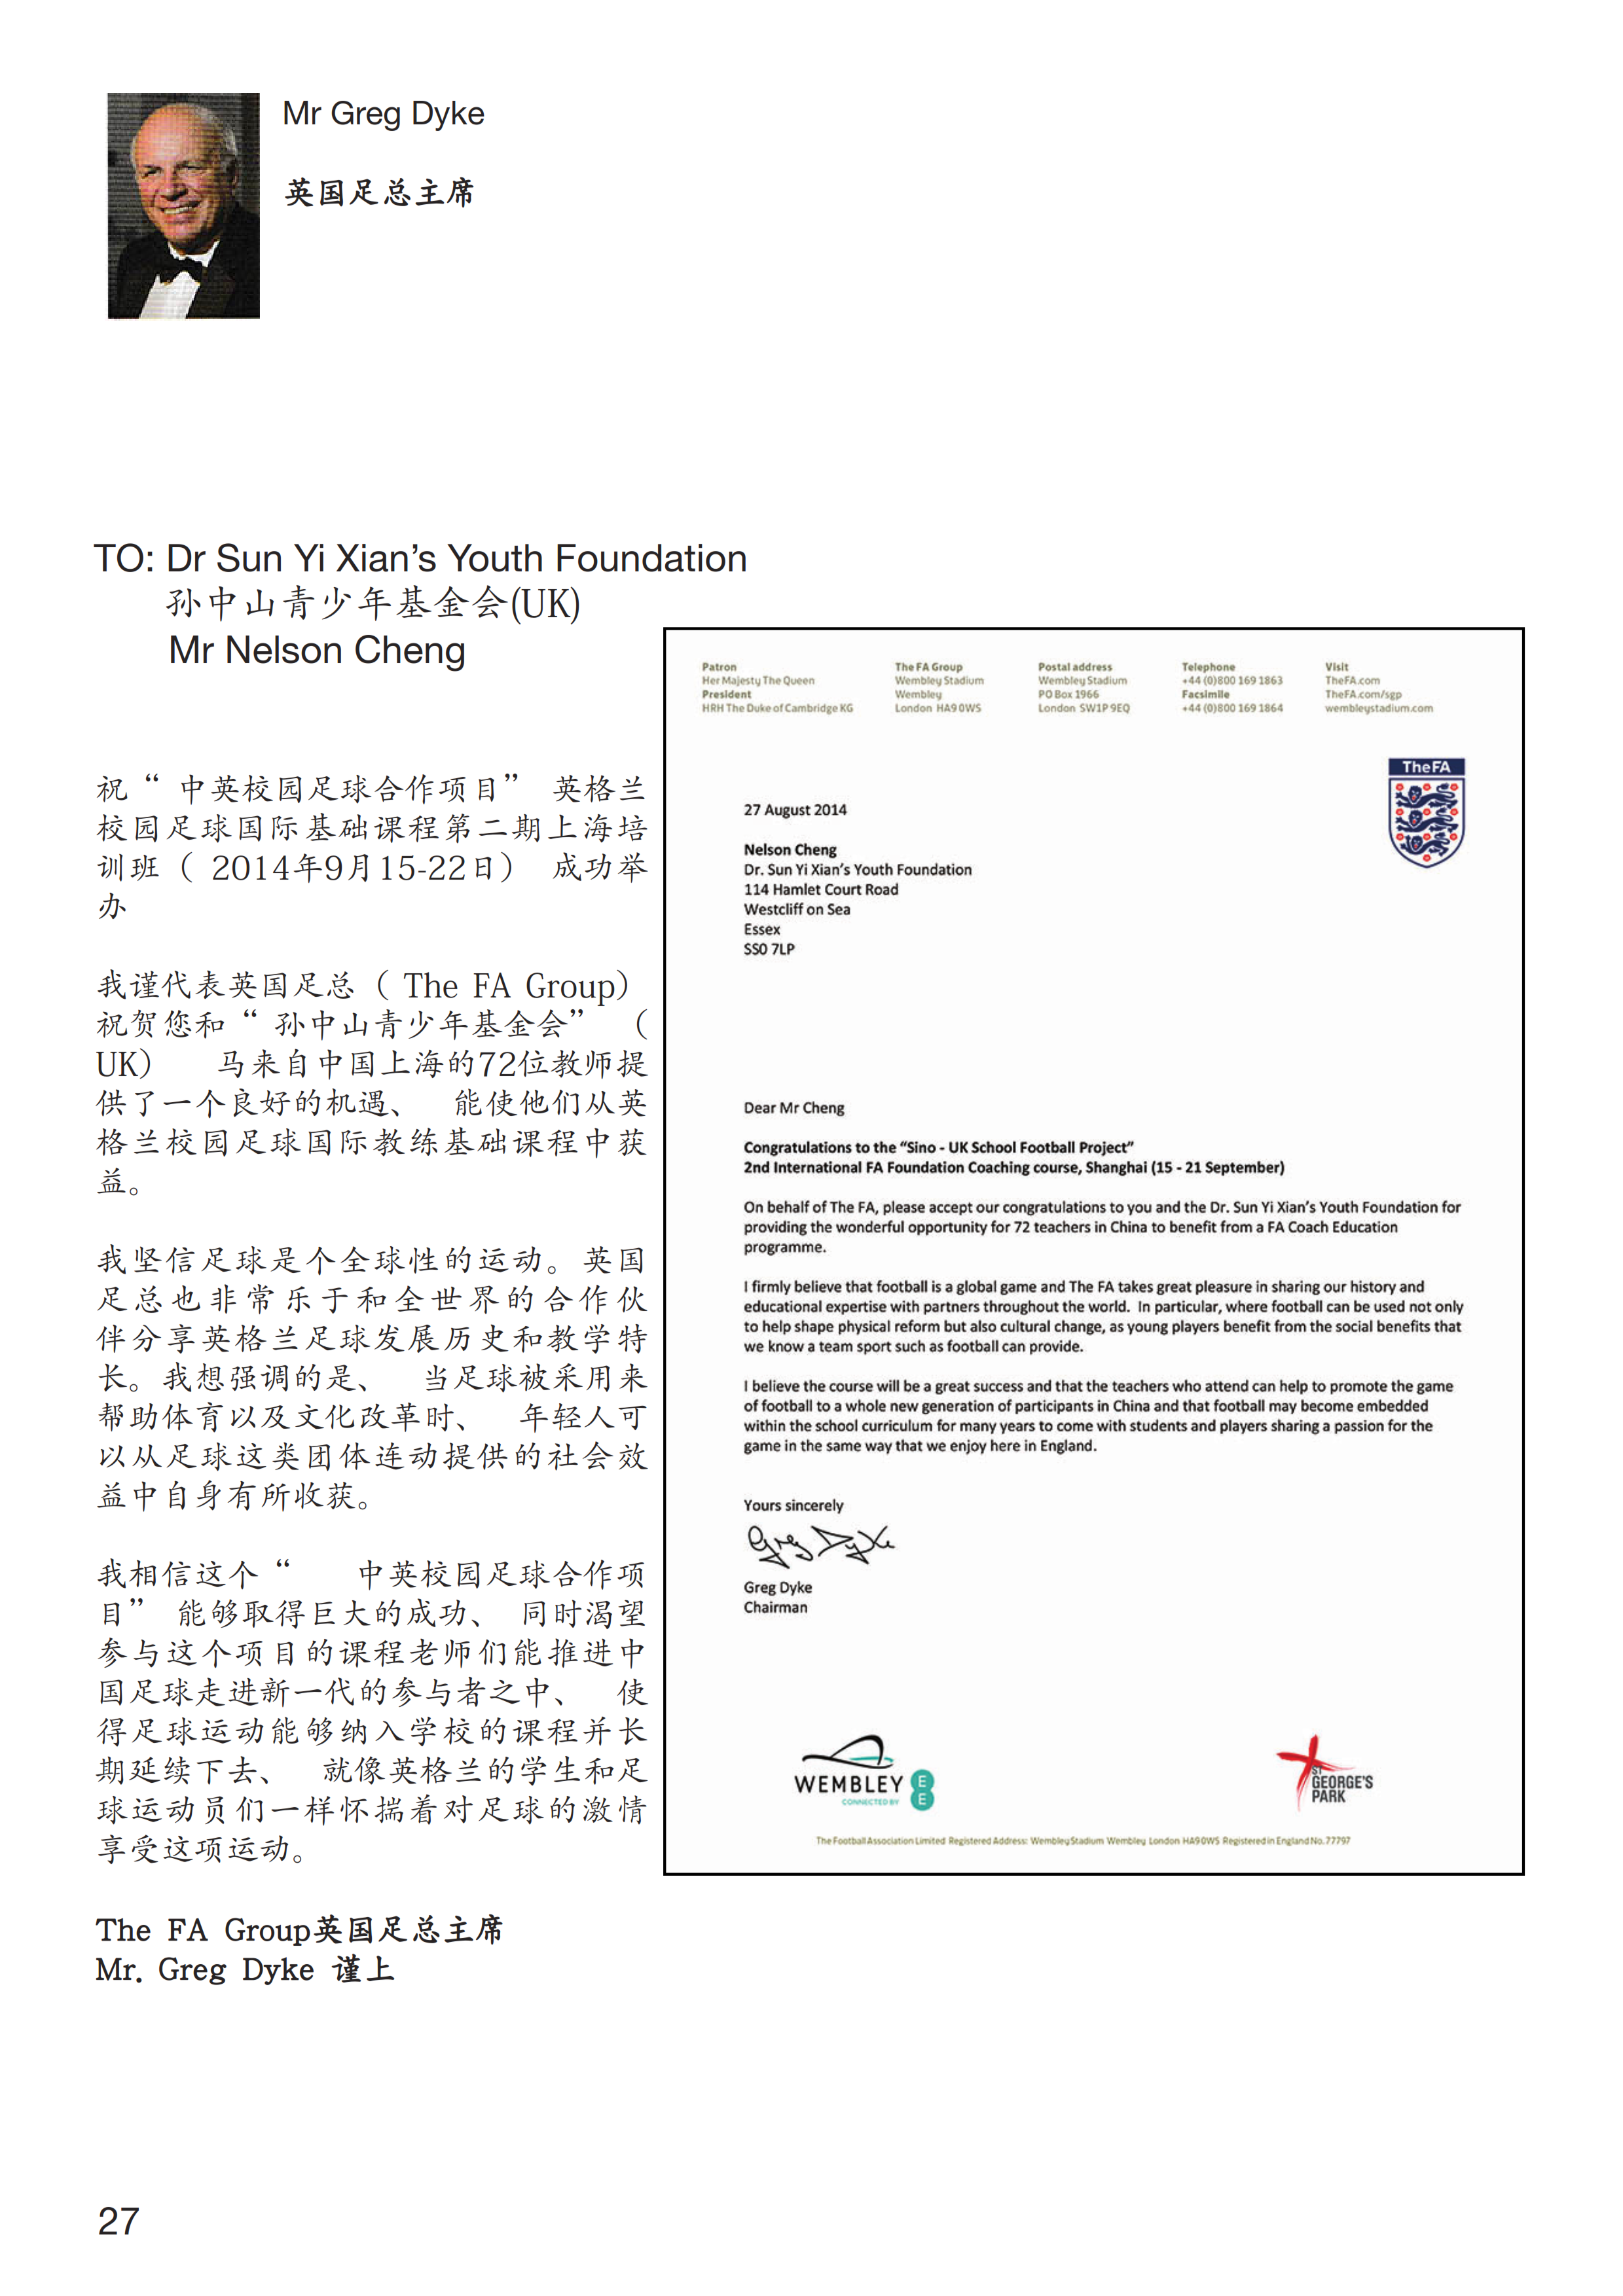 sino uk school football project letter 008